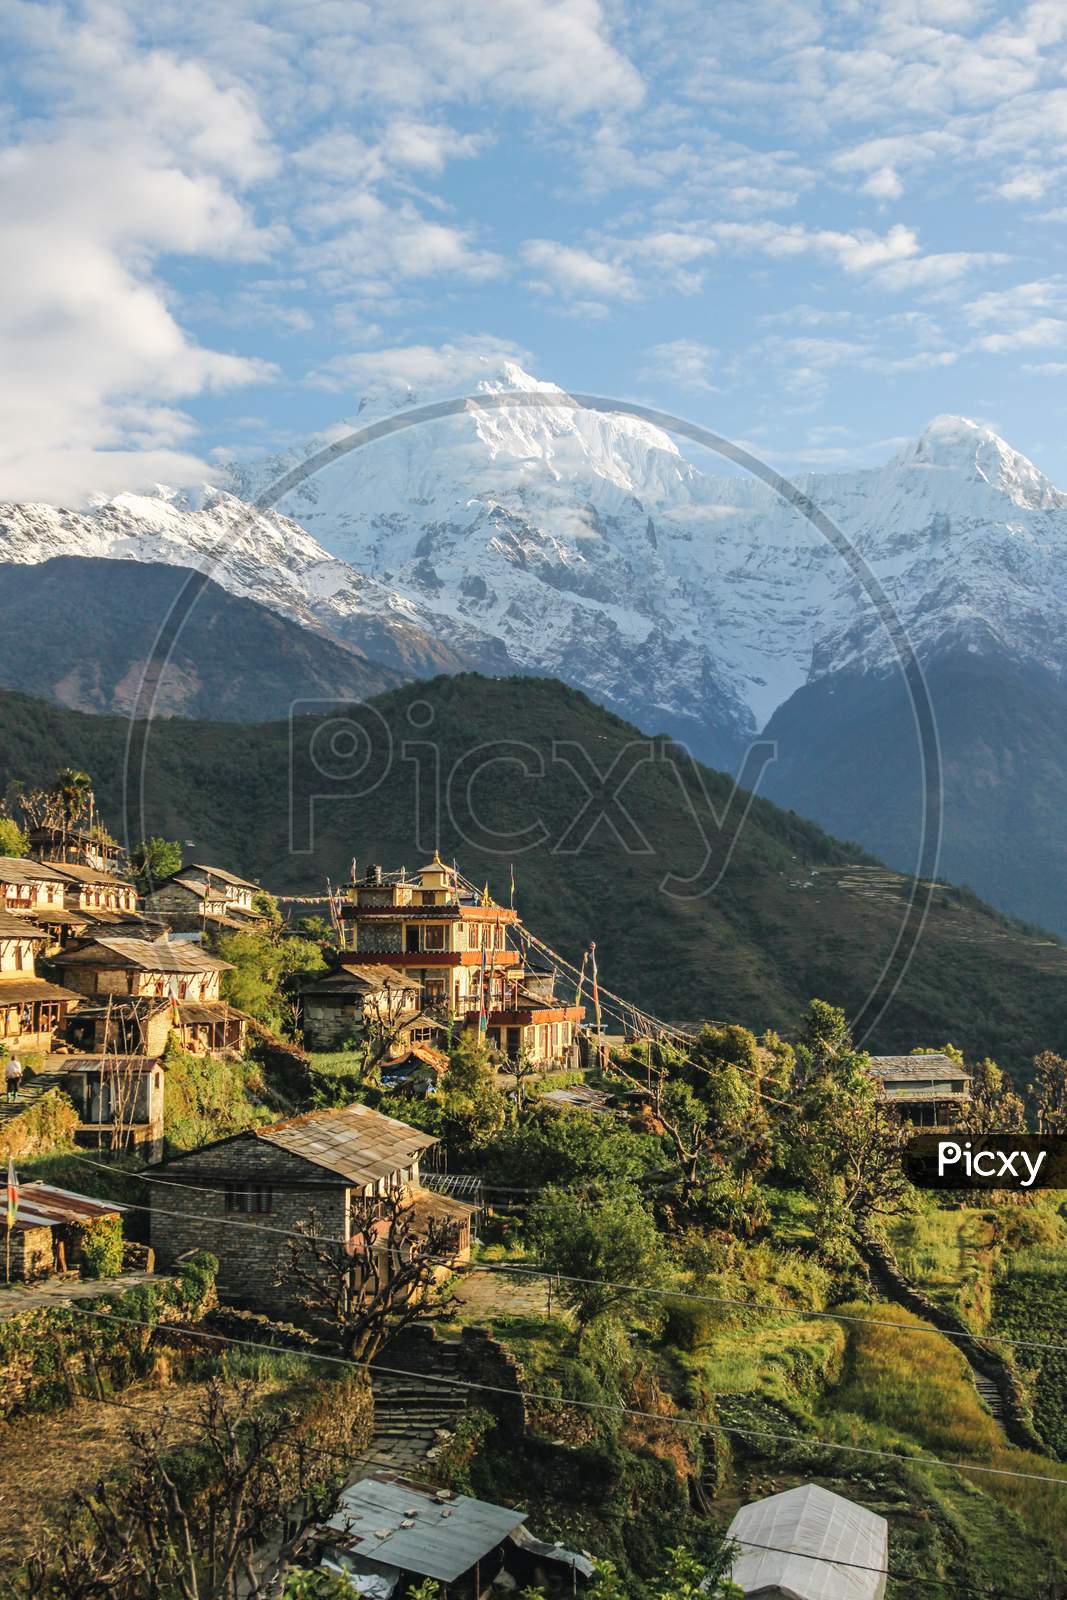 beautiful village of Nepal, Tourist area in Annapurna, Narchyang, Nepal